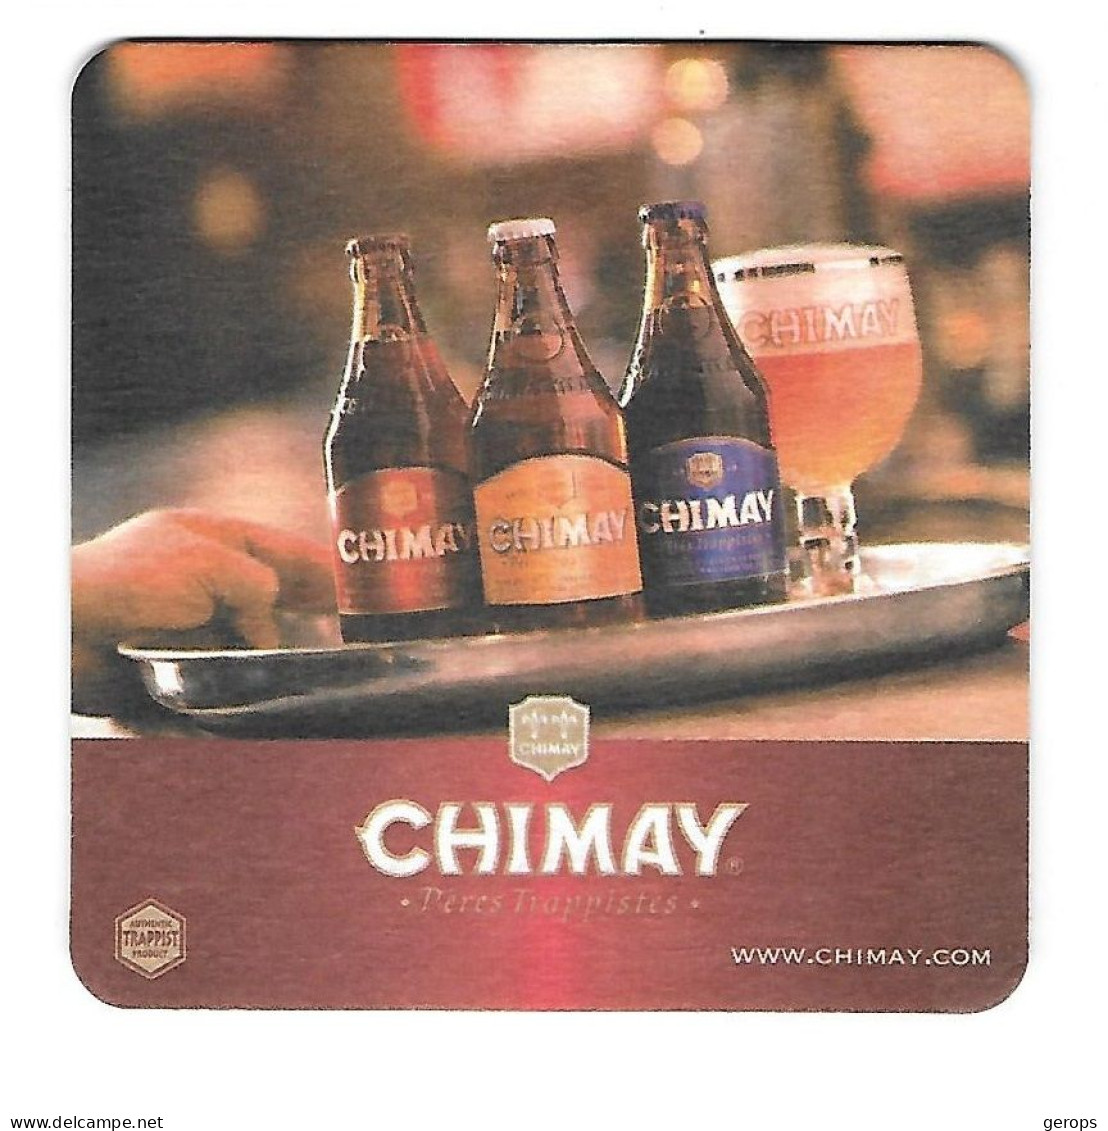 23a Chimay Peres Trappistes Kleine Hoeken - Beer Mats